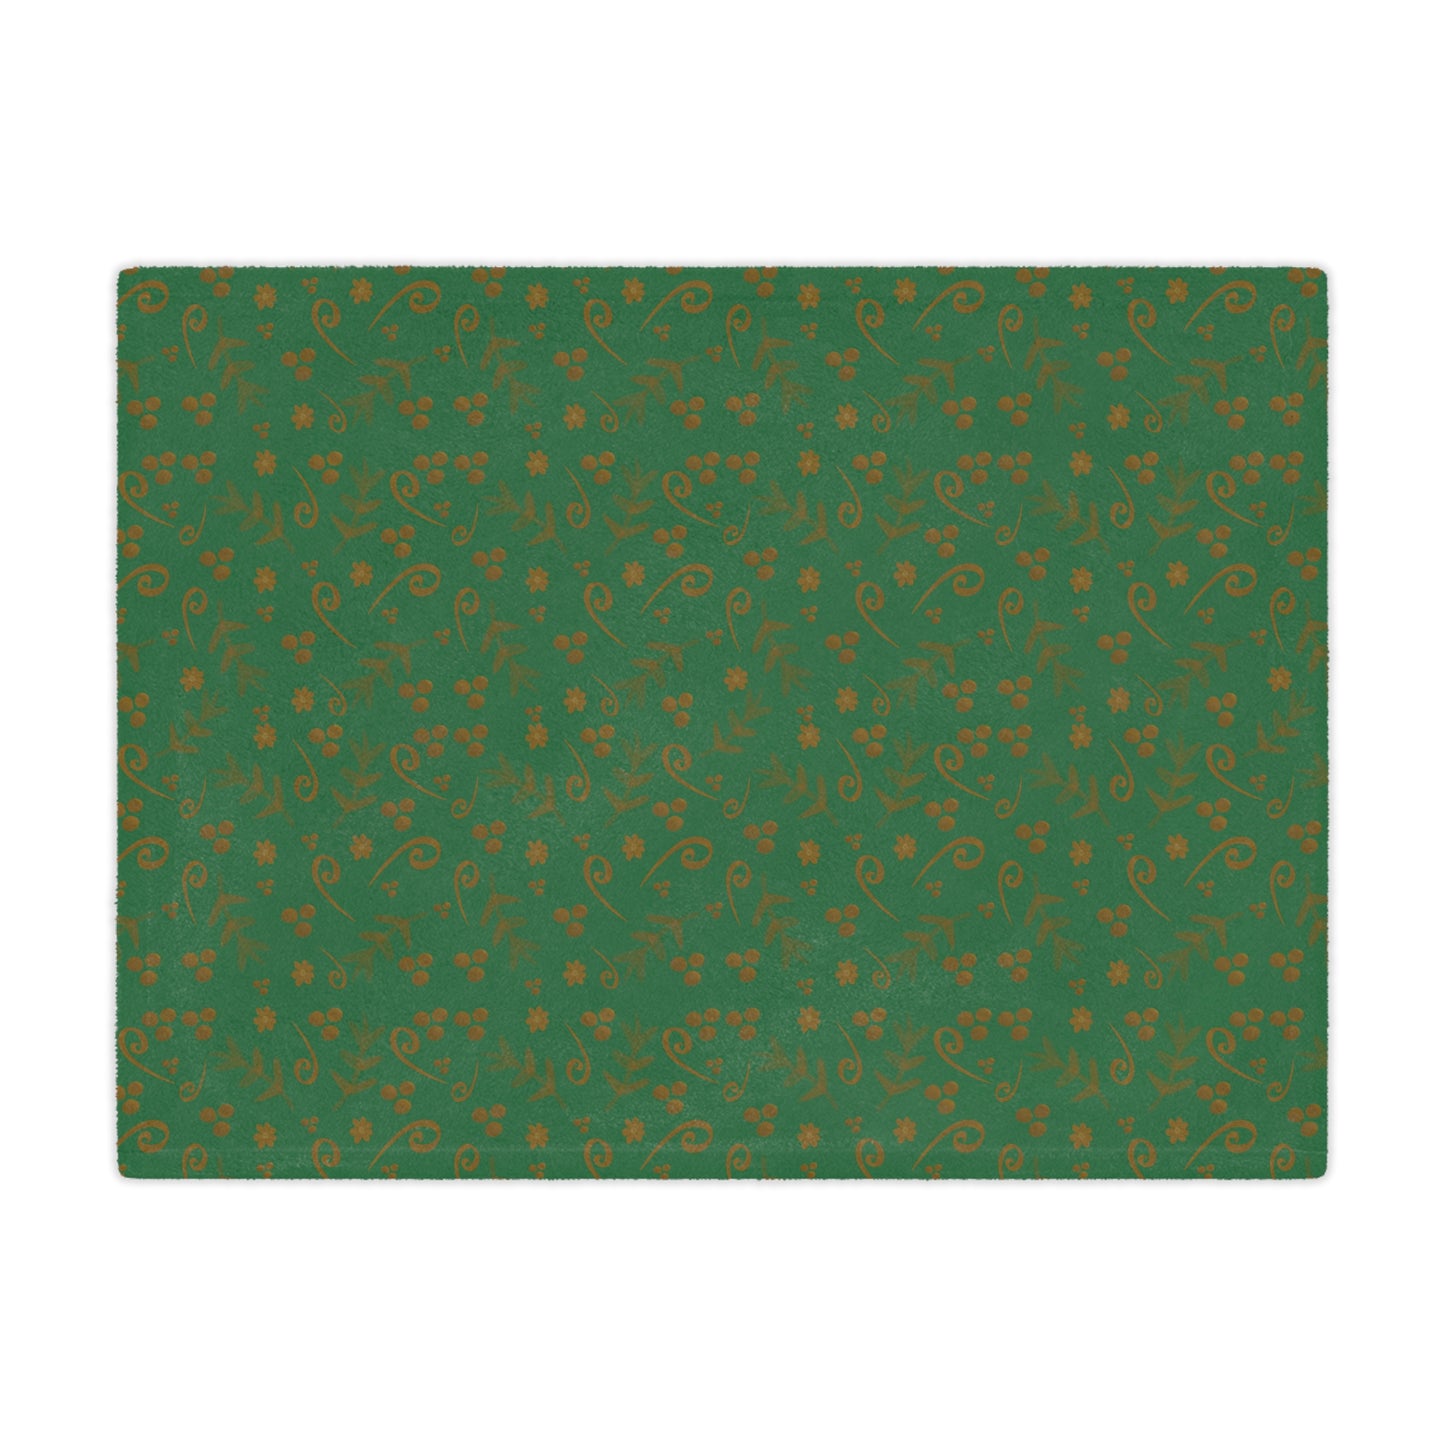 Clementine Green Minky blanket